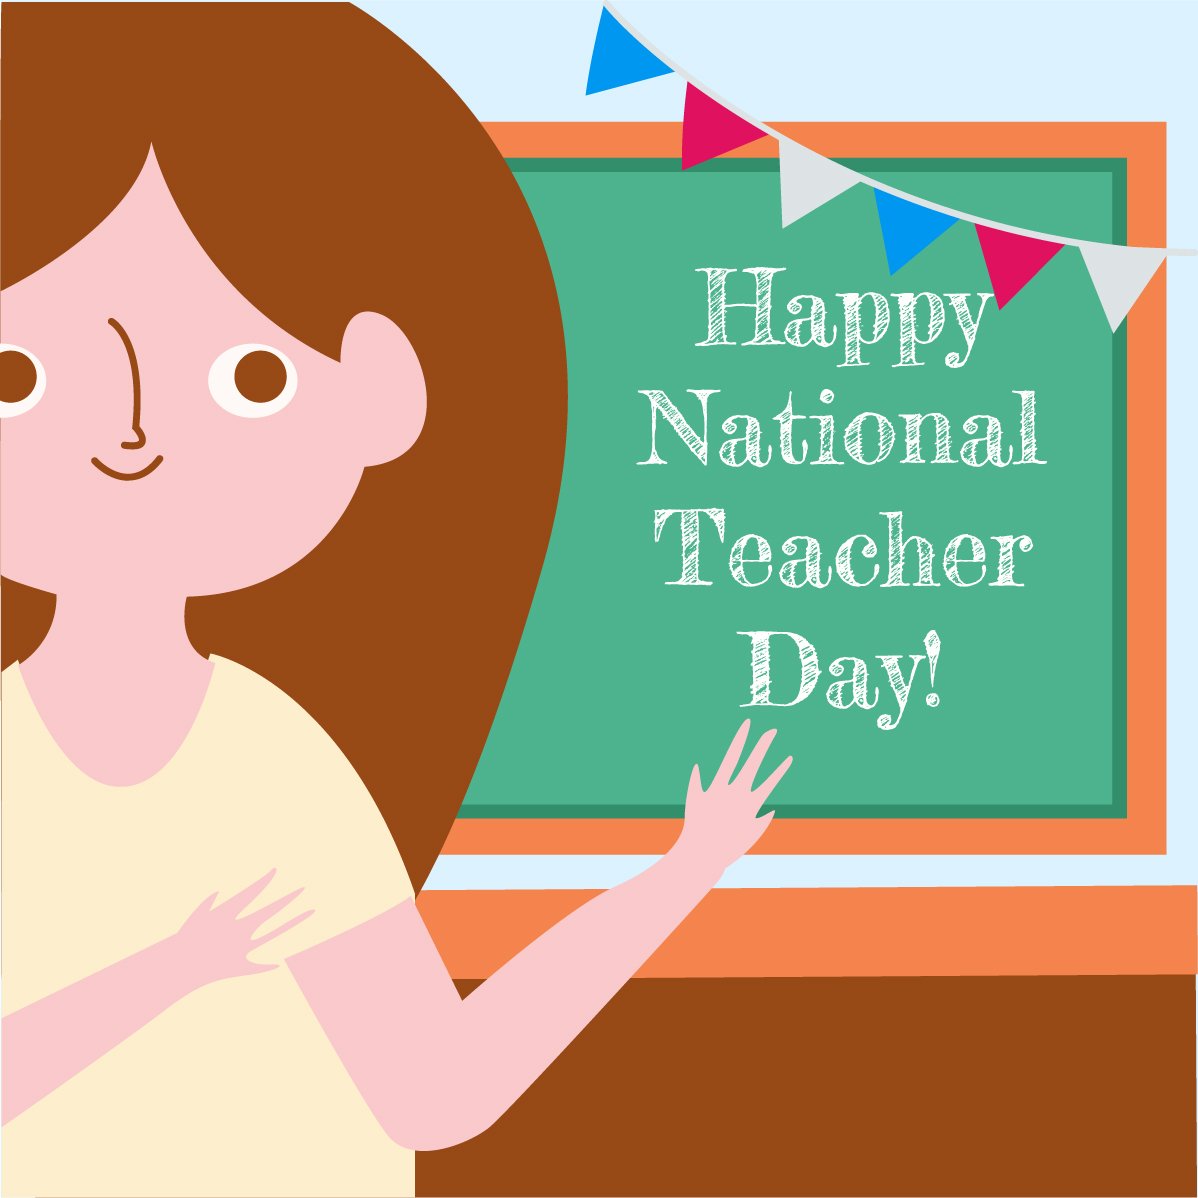 Free Happy National Teacher Day Illustration in Illustrator, PSD, EPS, SVG, JPG, PNG